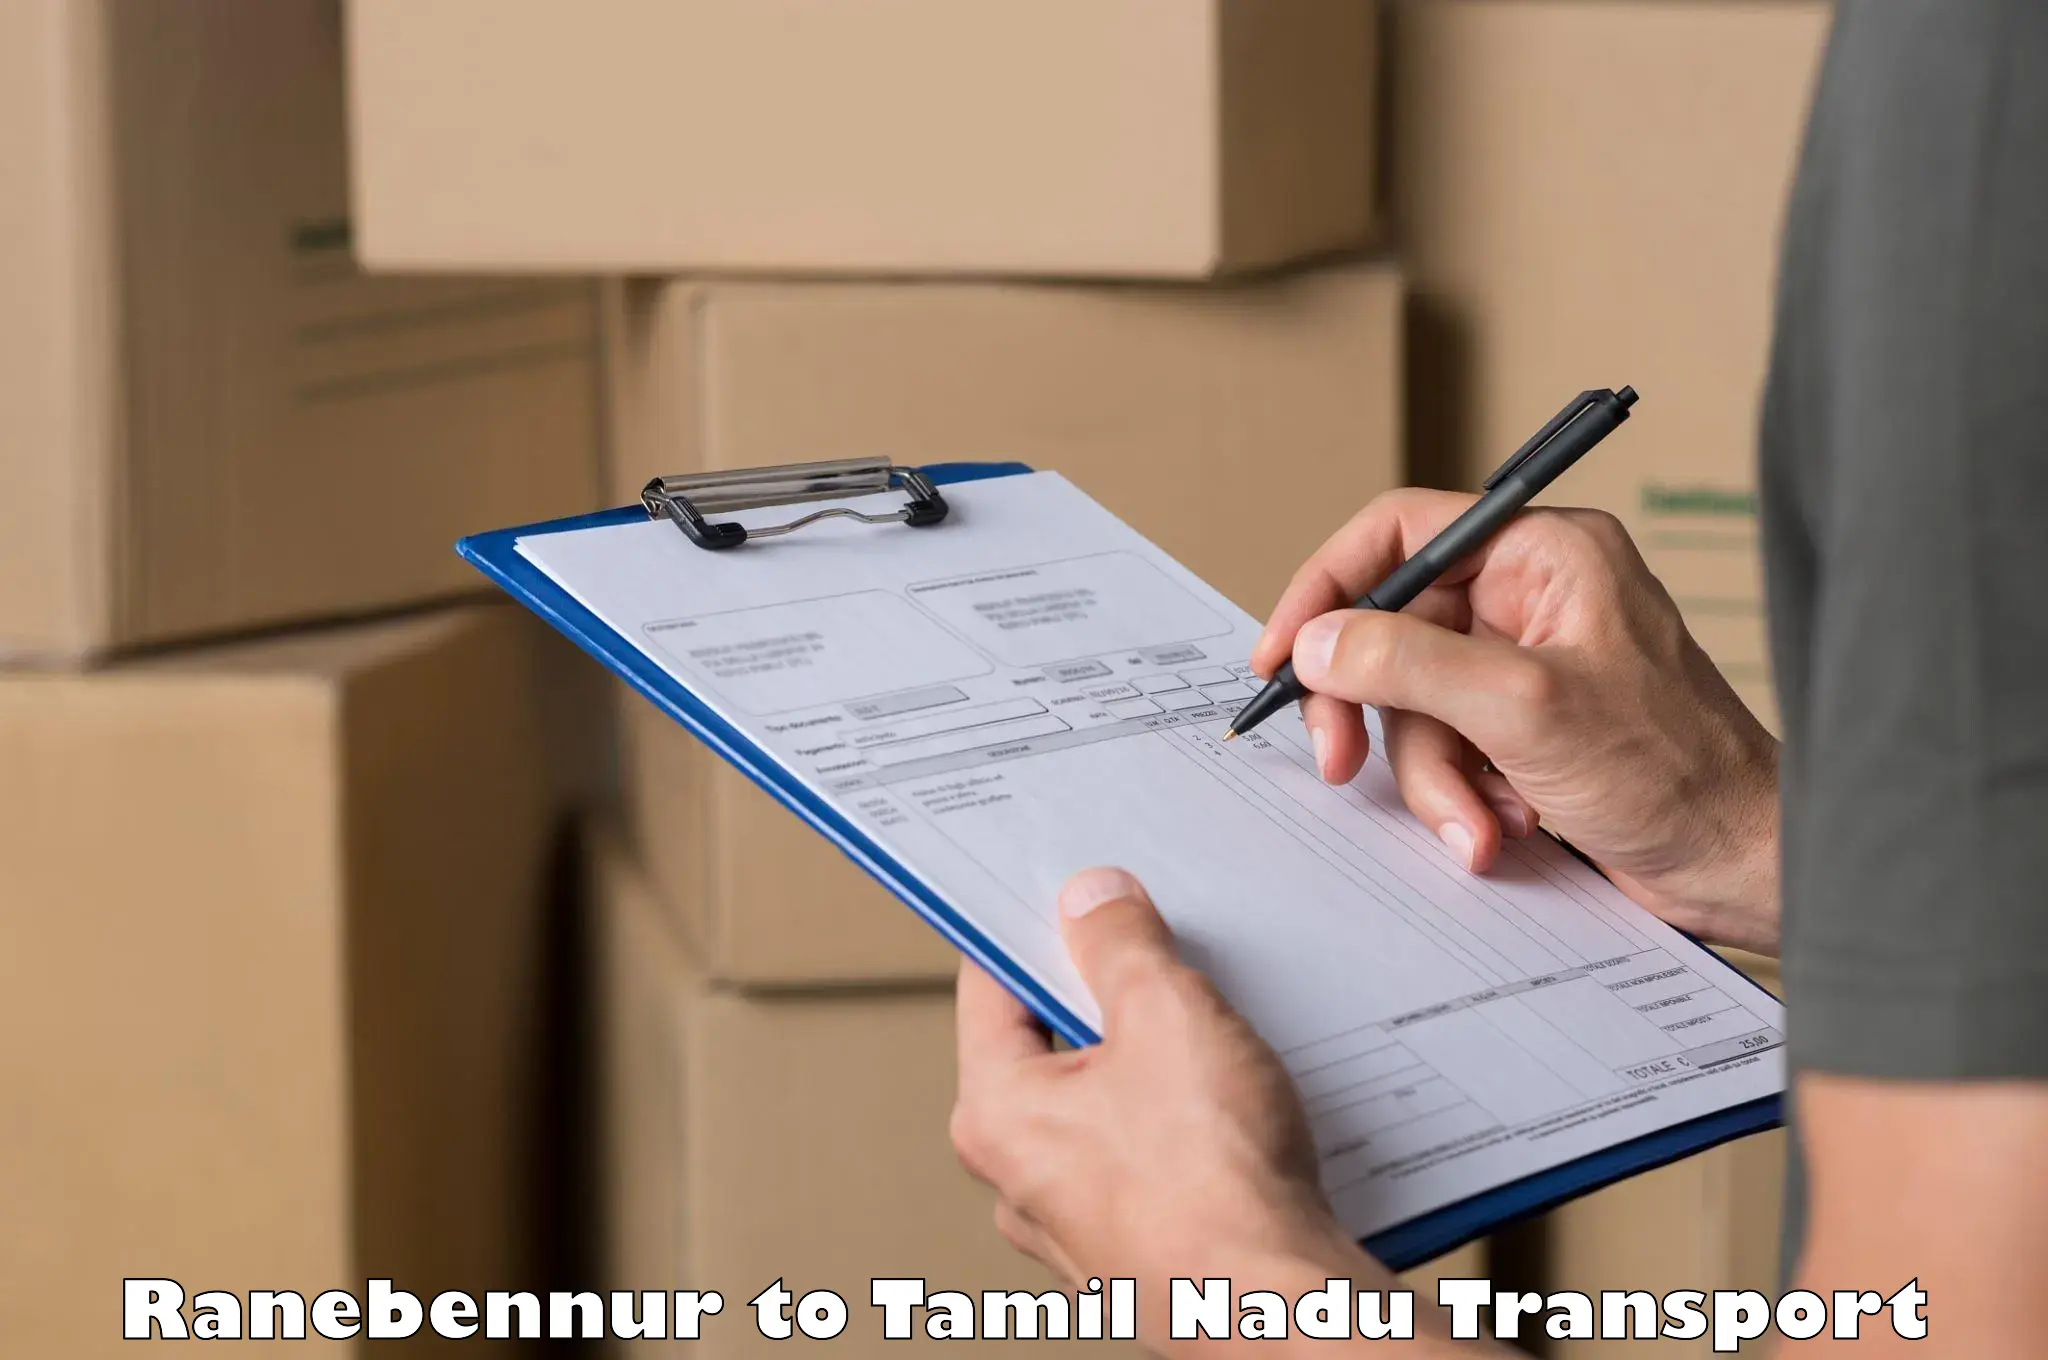 Delivery service Ranebennur to Vandavasi